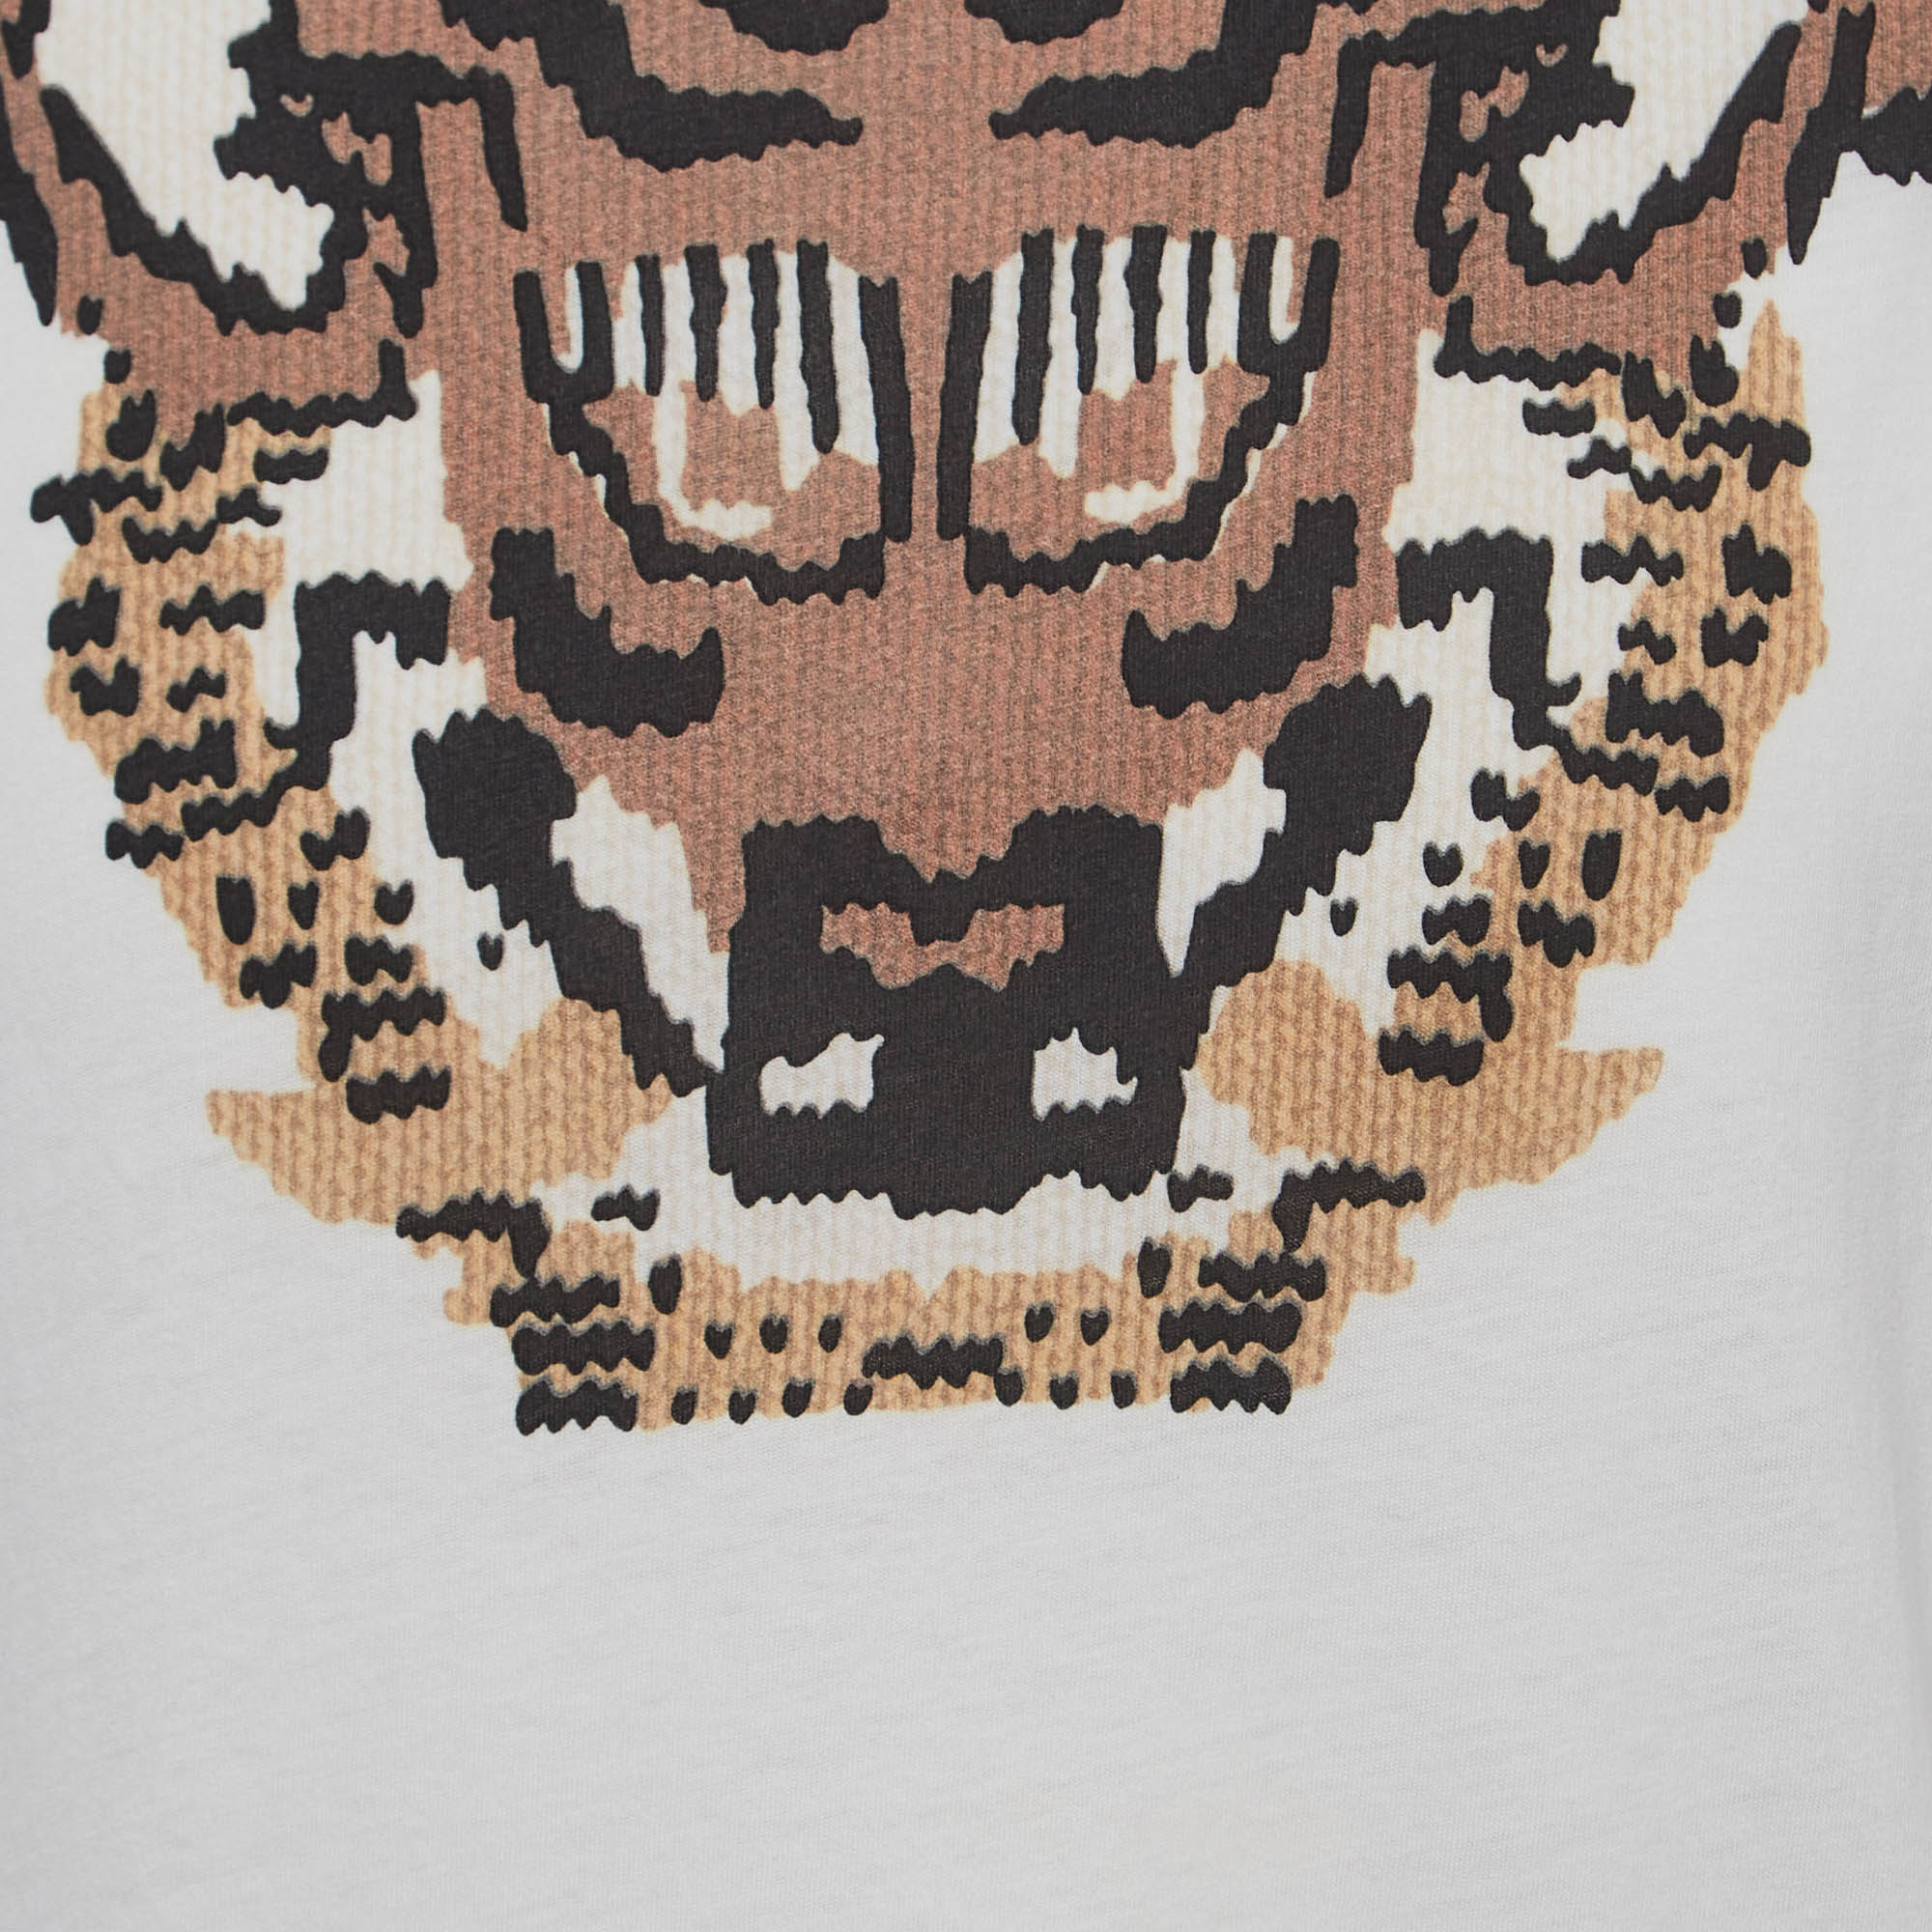 Gucci White Tiger Print Cotton Crew Neck T-Shirt M